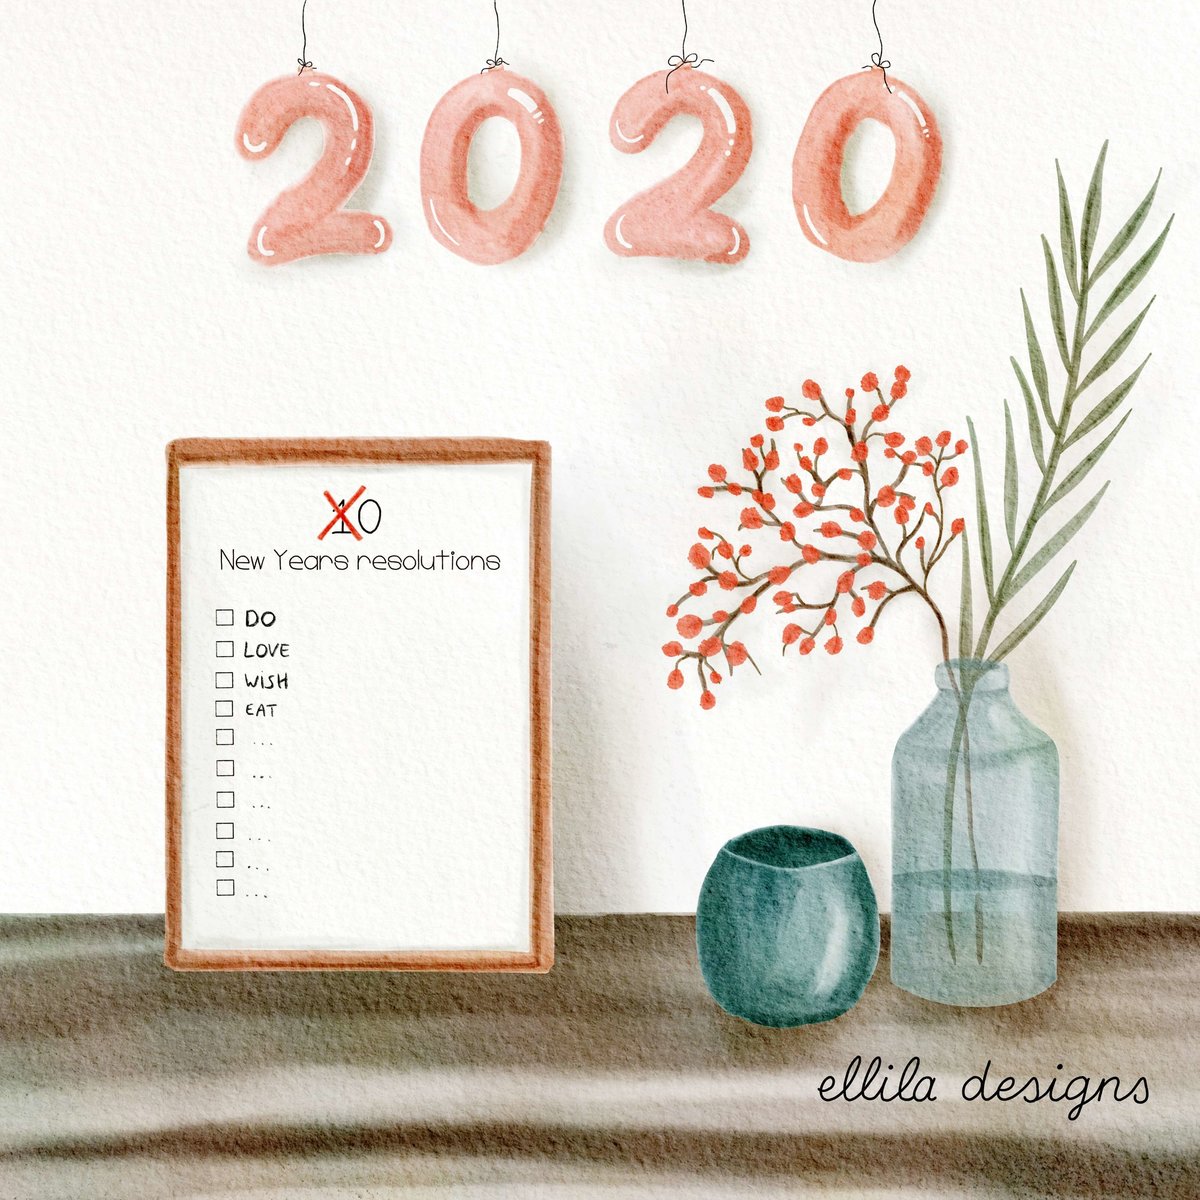 Decor 2020 illustration Ellila Designs